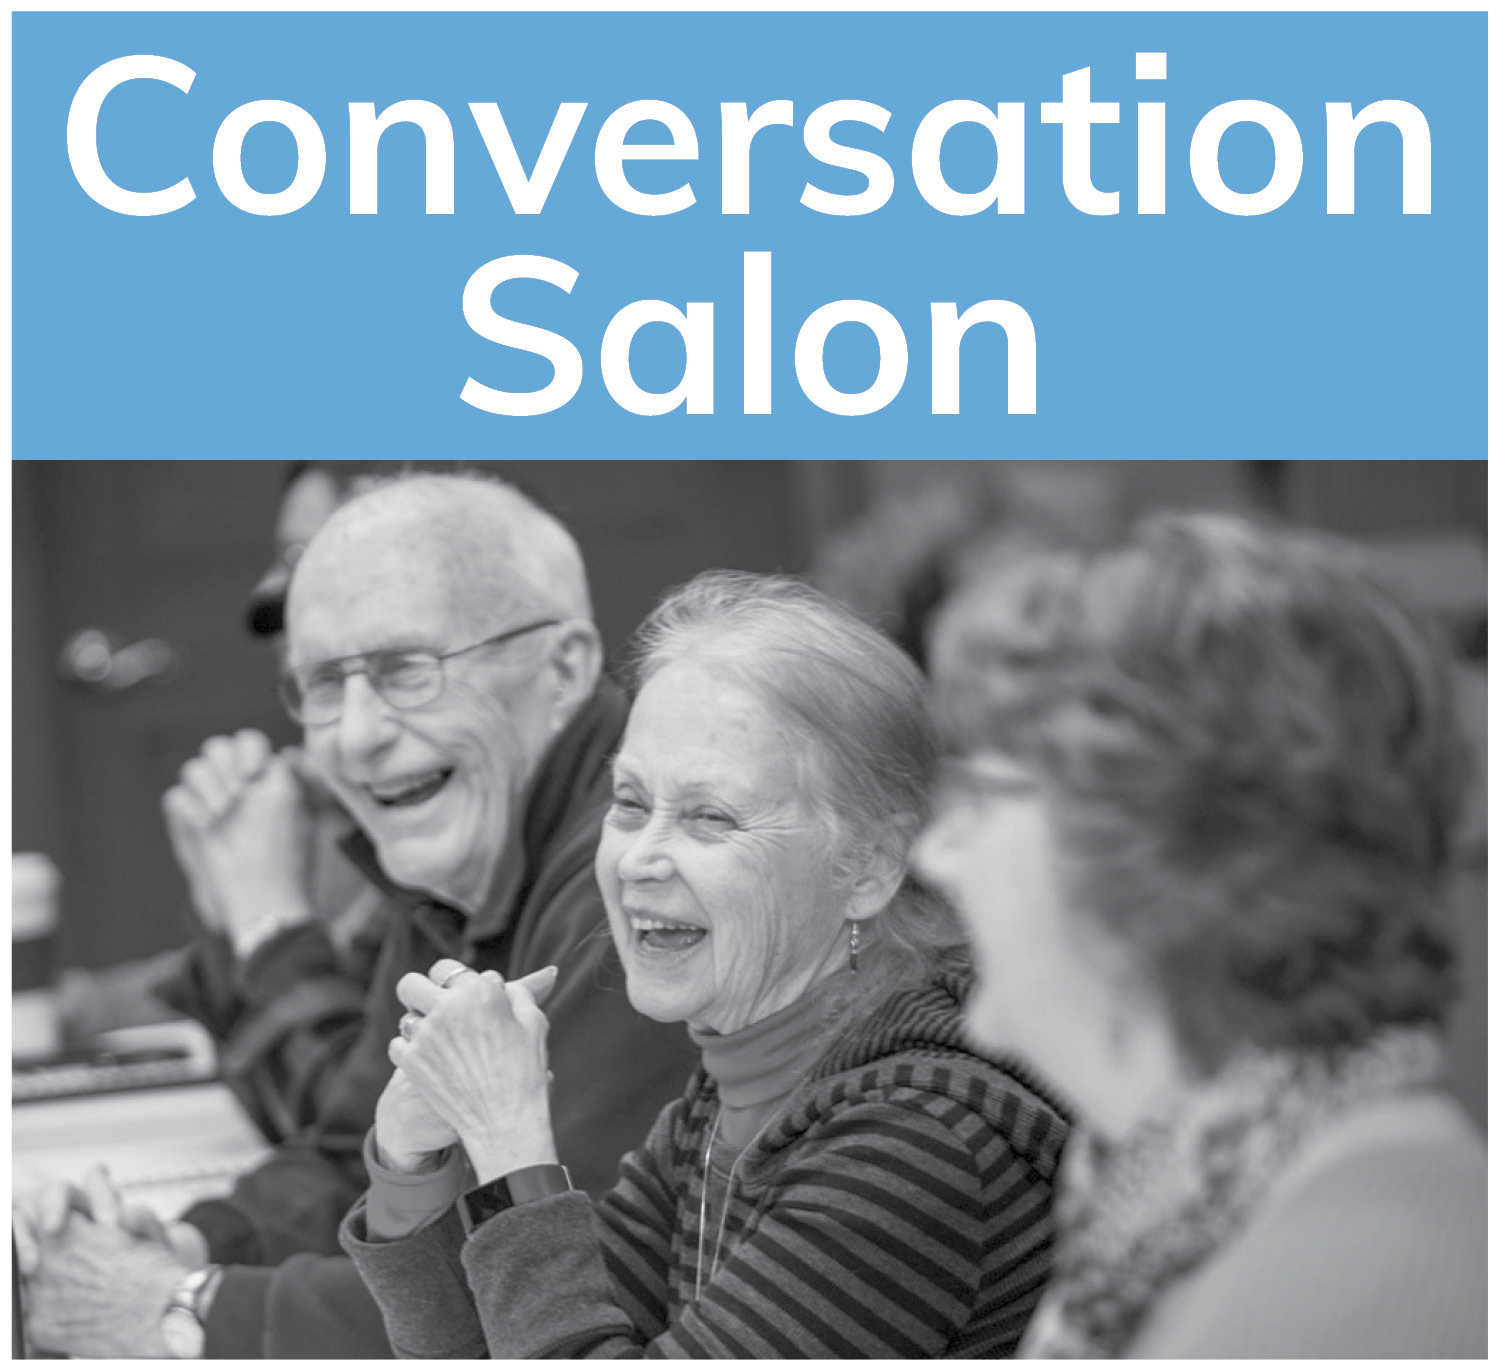 Conversation Salon group logo